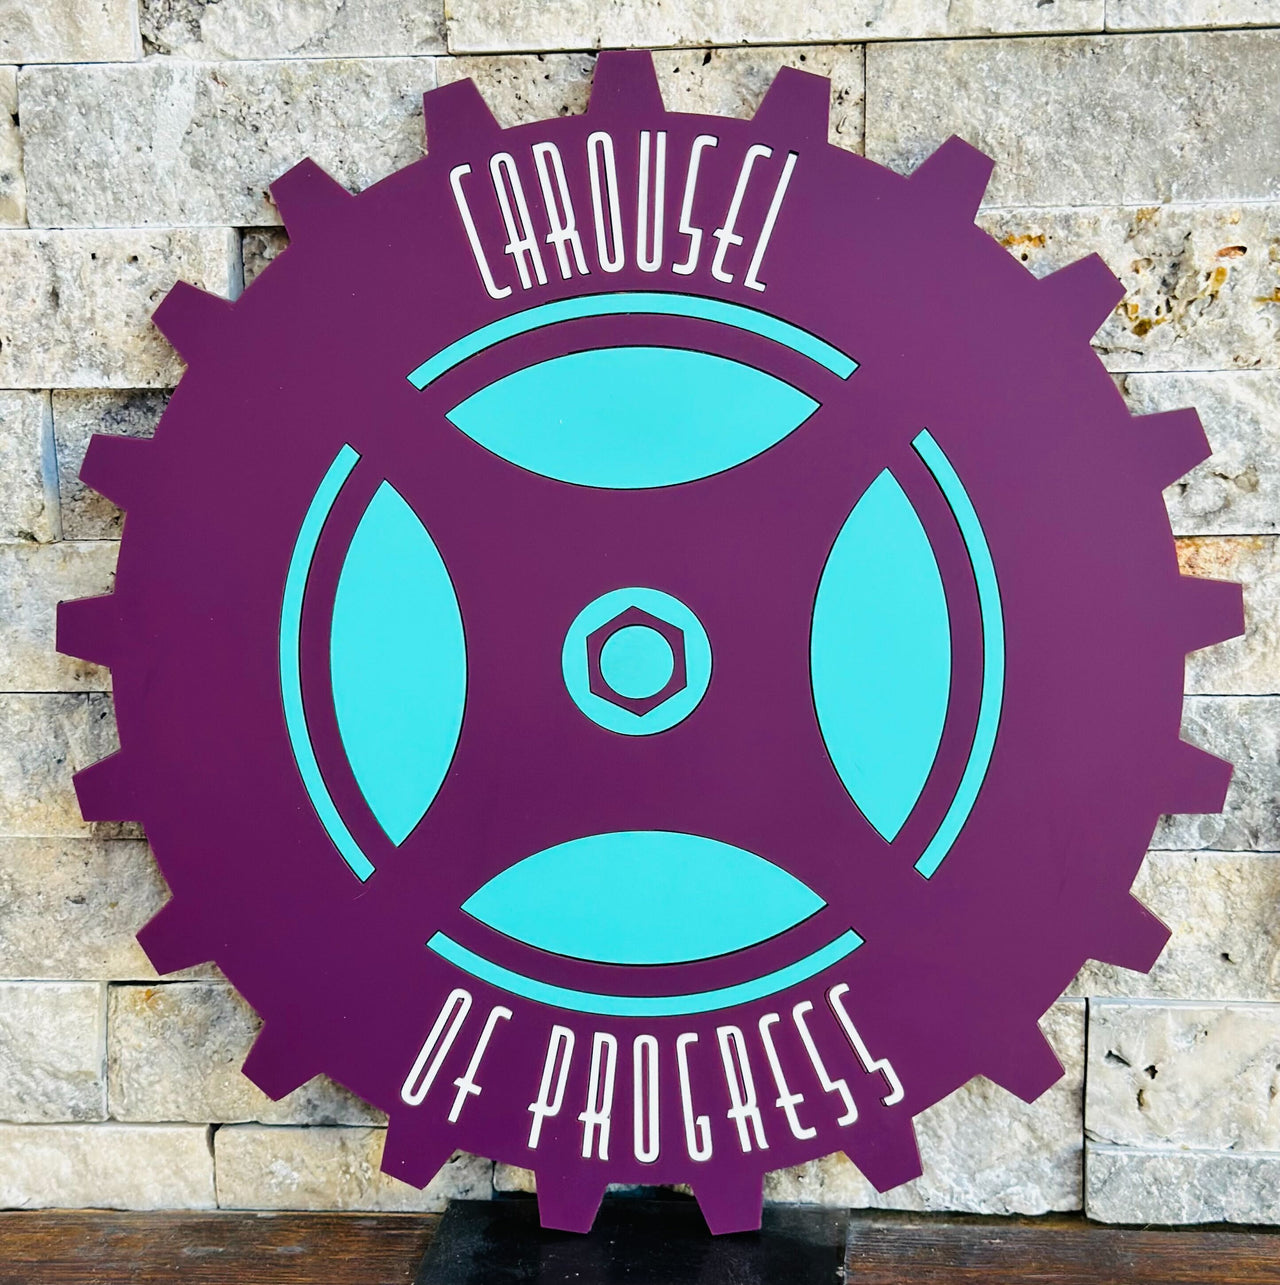 Carousel Of Progress Sign